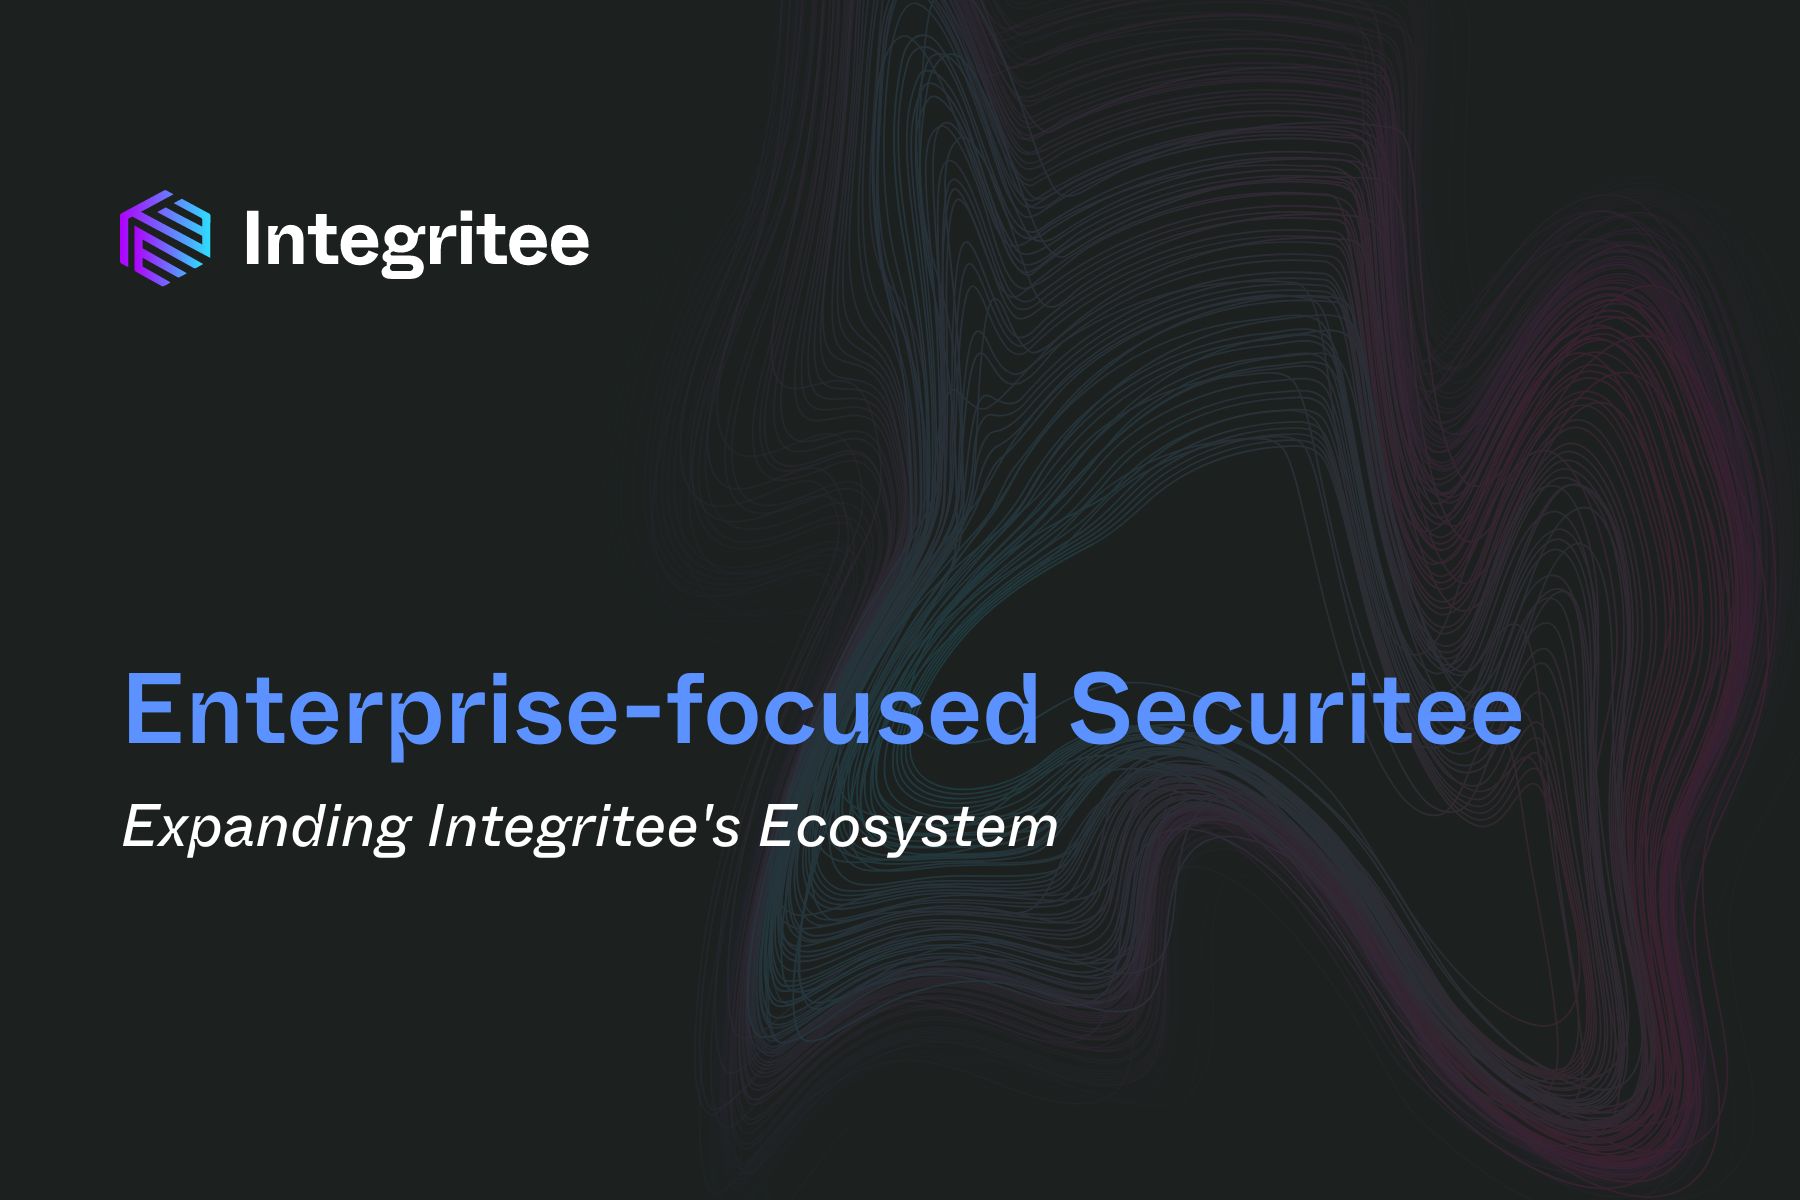 Enterprise-Focused Securitee Expands Integritee’s Ecosystem